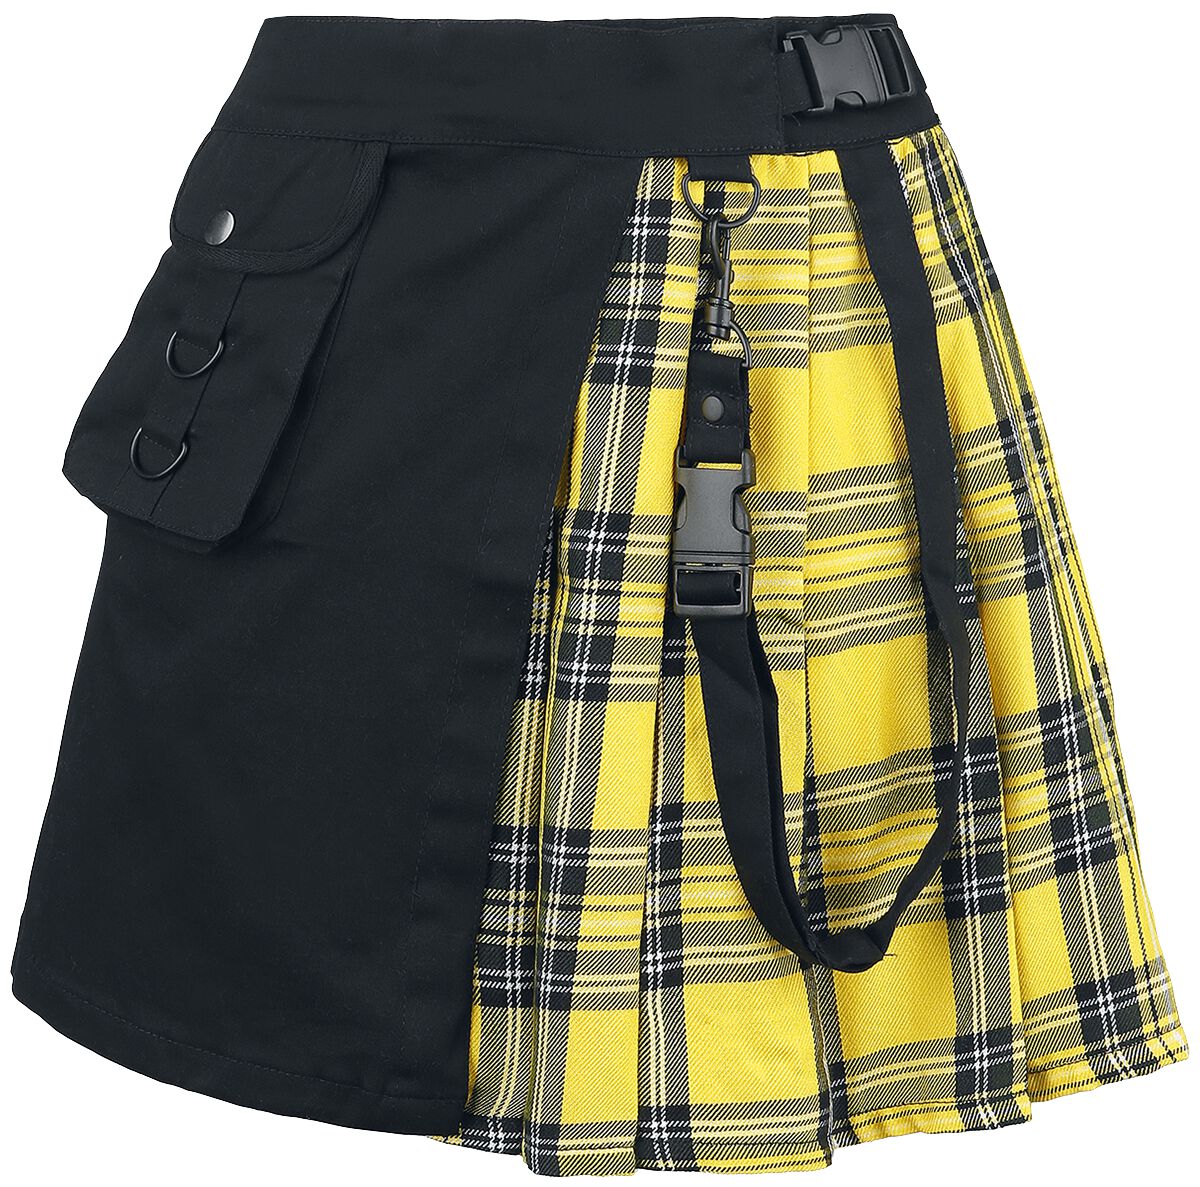 Chemical Black Infinity Skirt Kurzer Rock schwarz gelb in XL